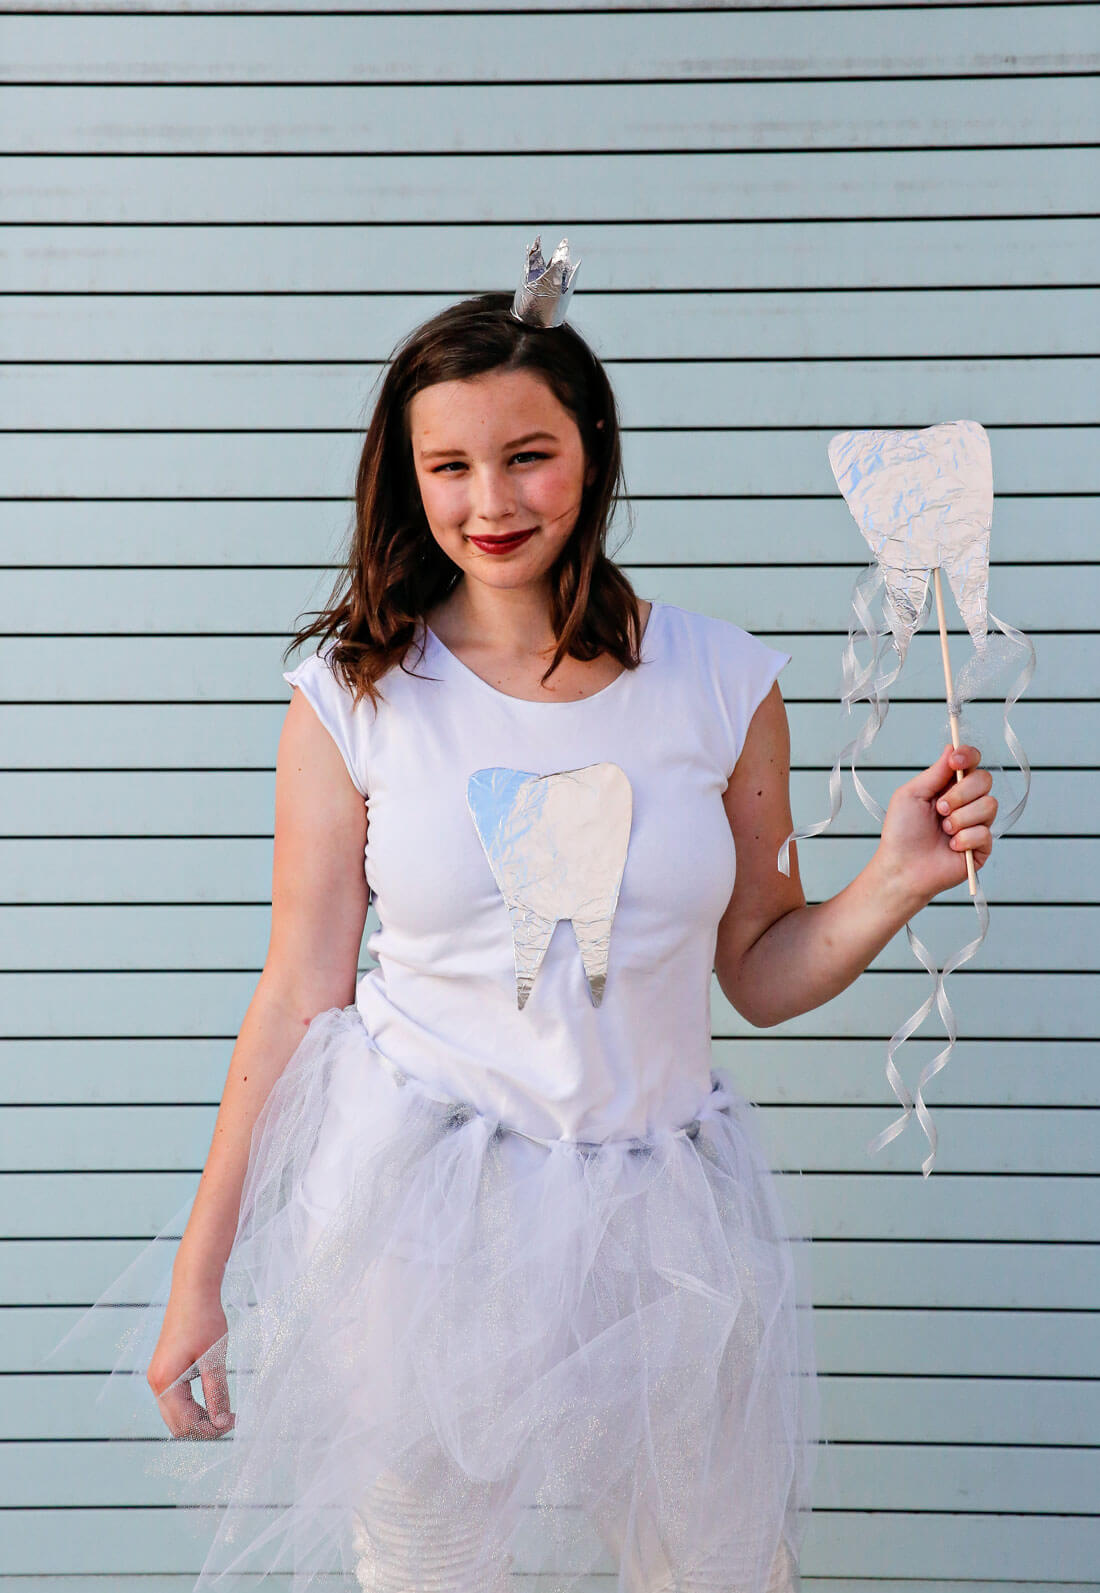 Last Minute Halloween Costumes: How to make a tooth fairy costume via www.thirtyhandmadedays.com